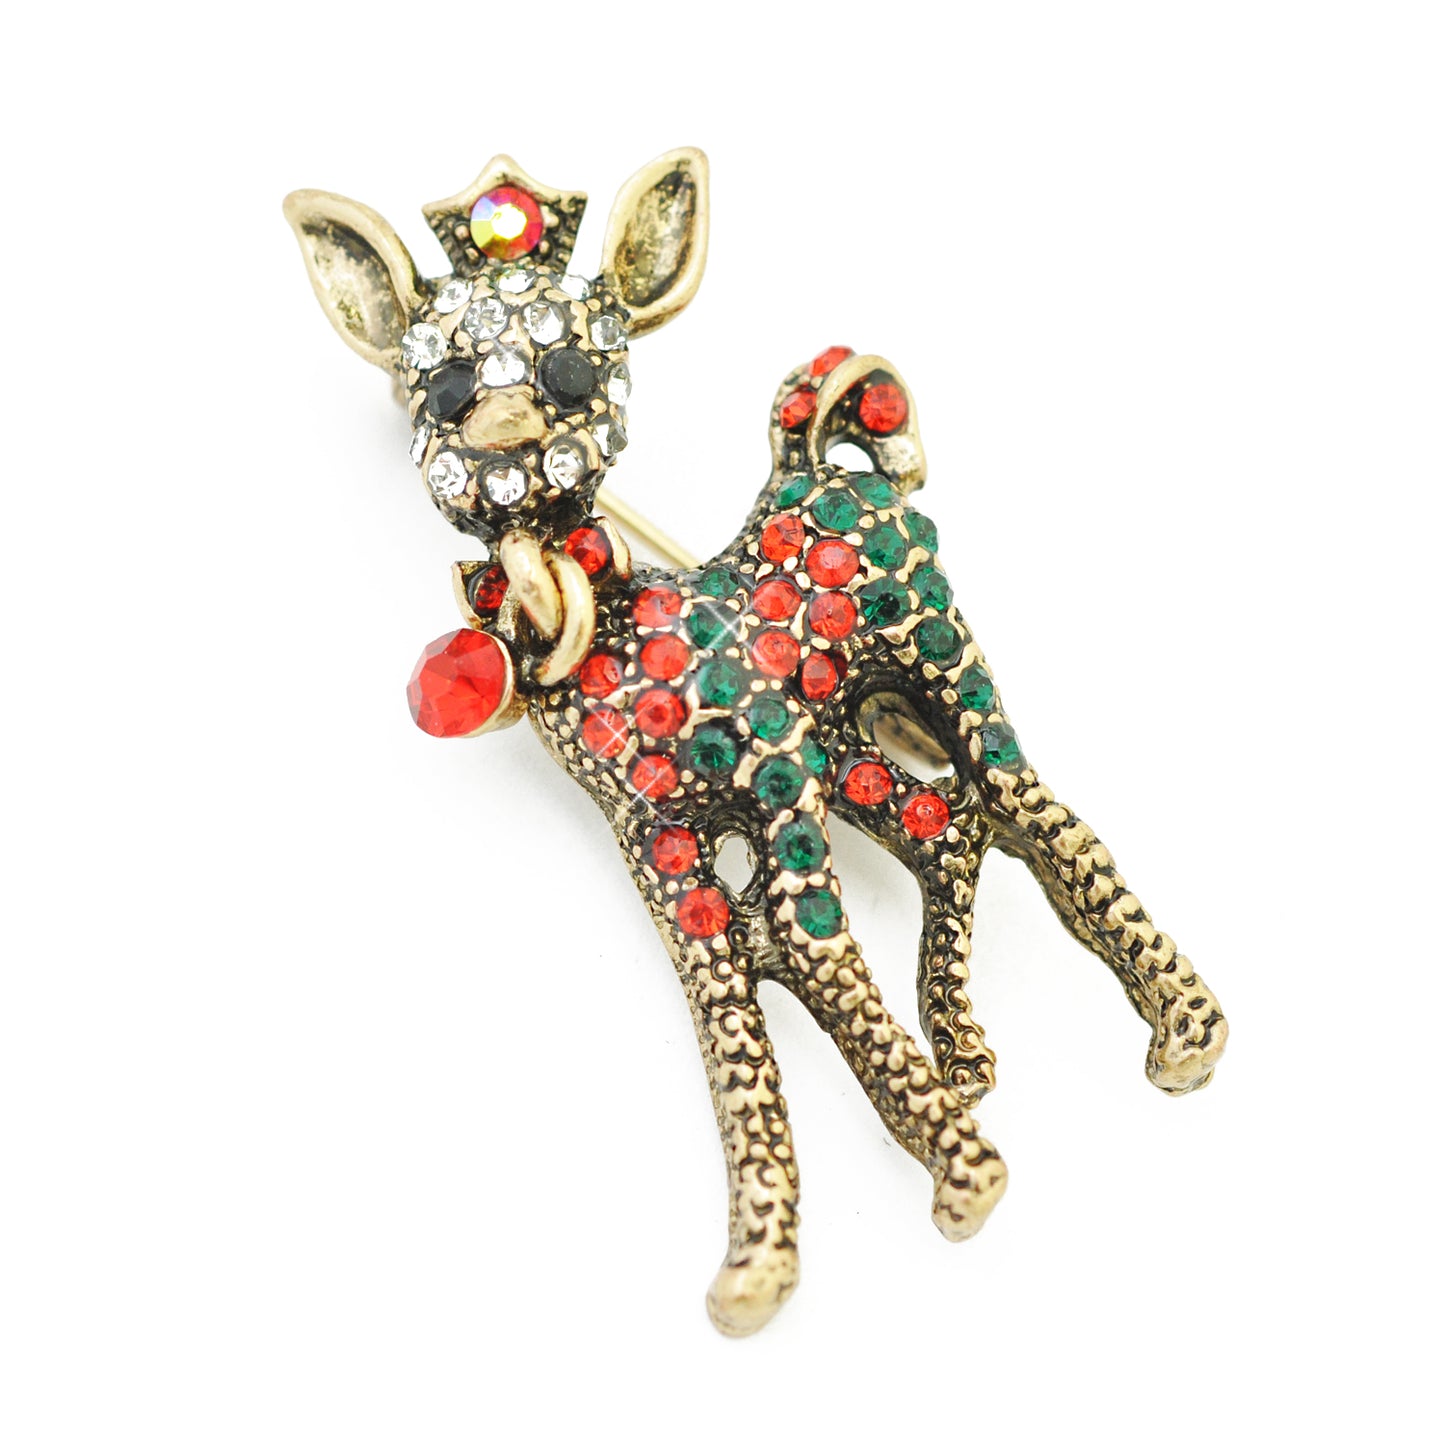 Christmas brooch deer Bambi / brass colored / 40x20mm